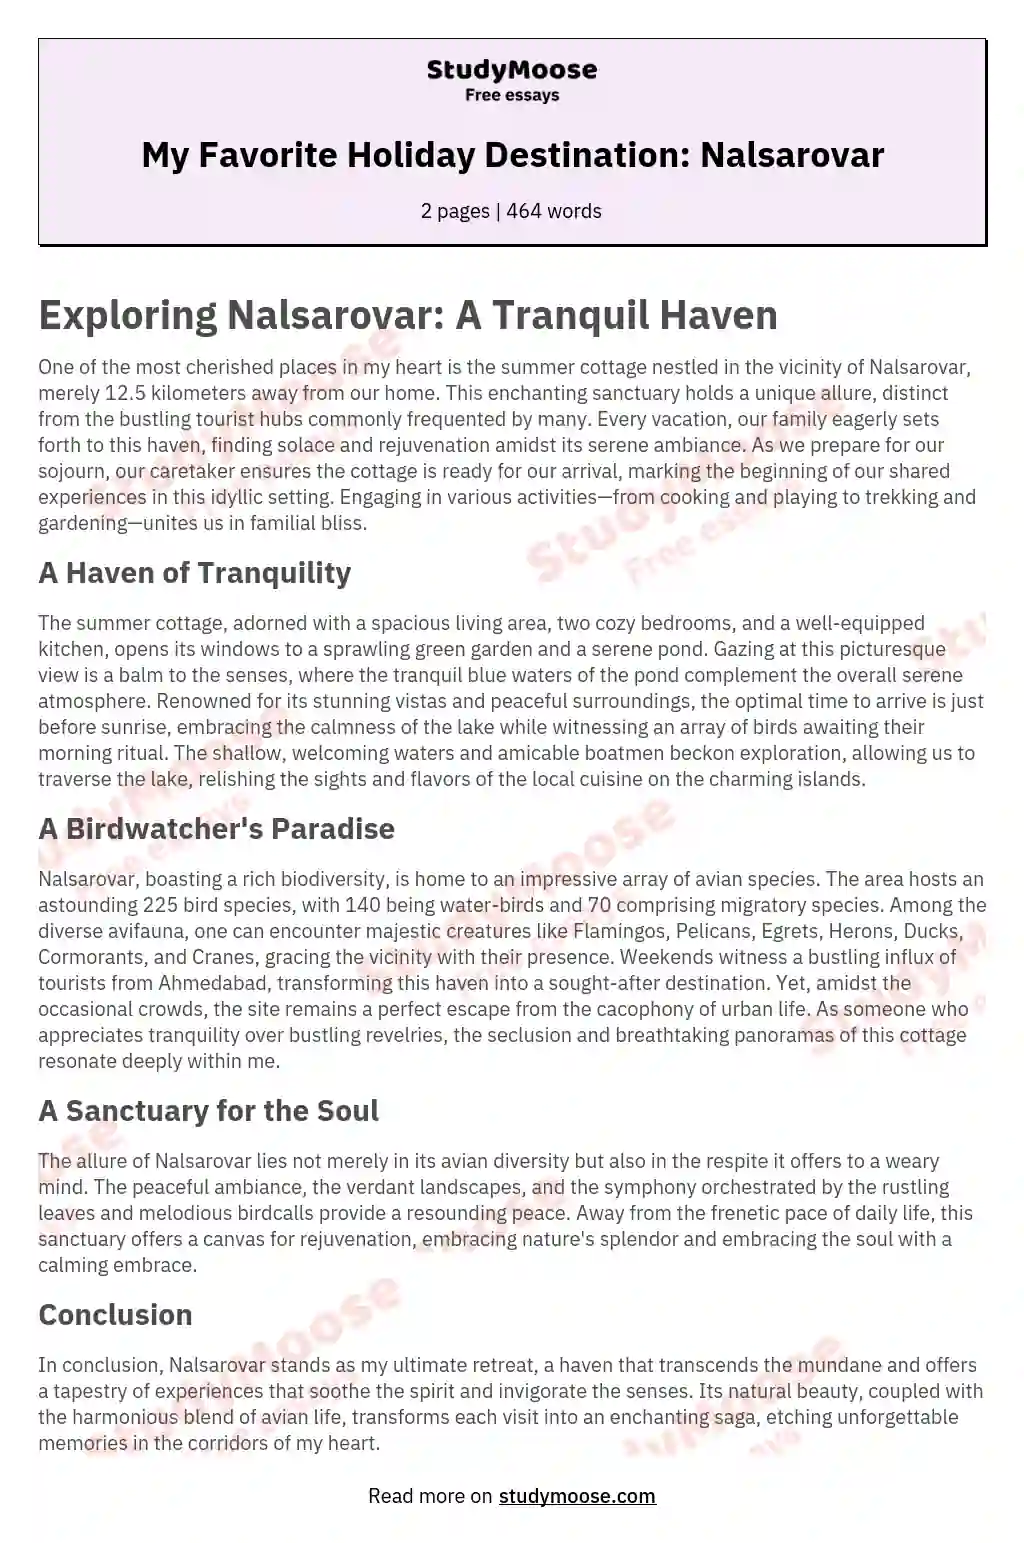 My Favorite Holiday Destination: Nalsarovar essay